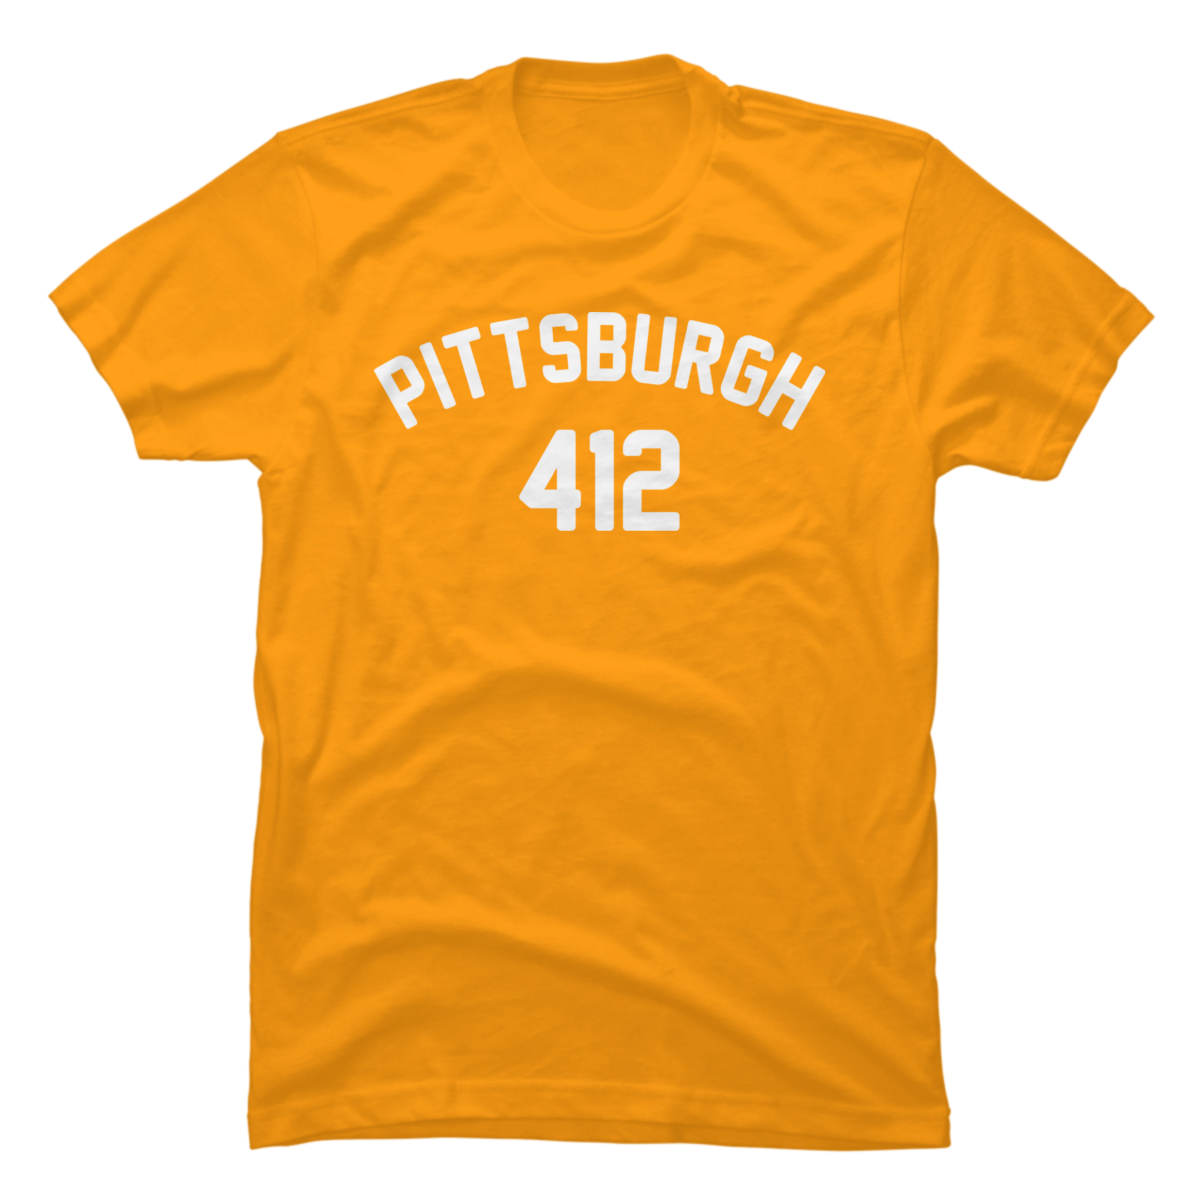 412 t shirt pittsburgh